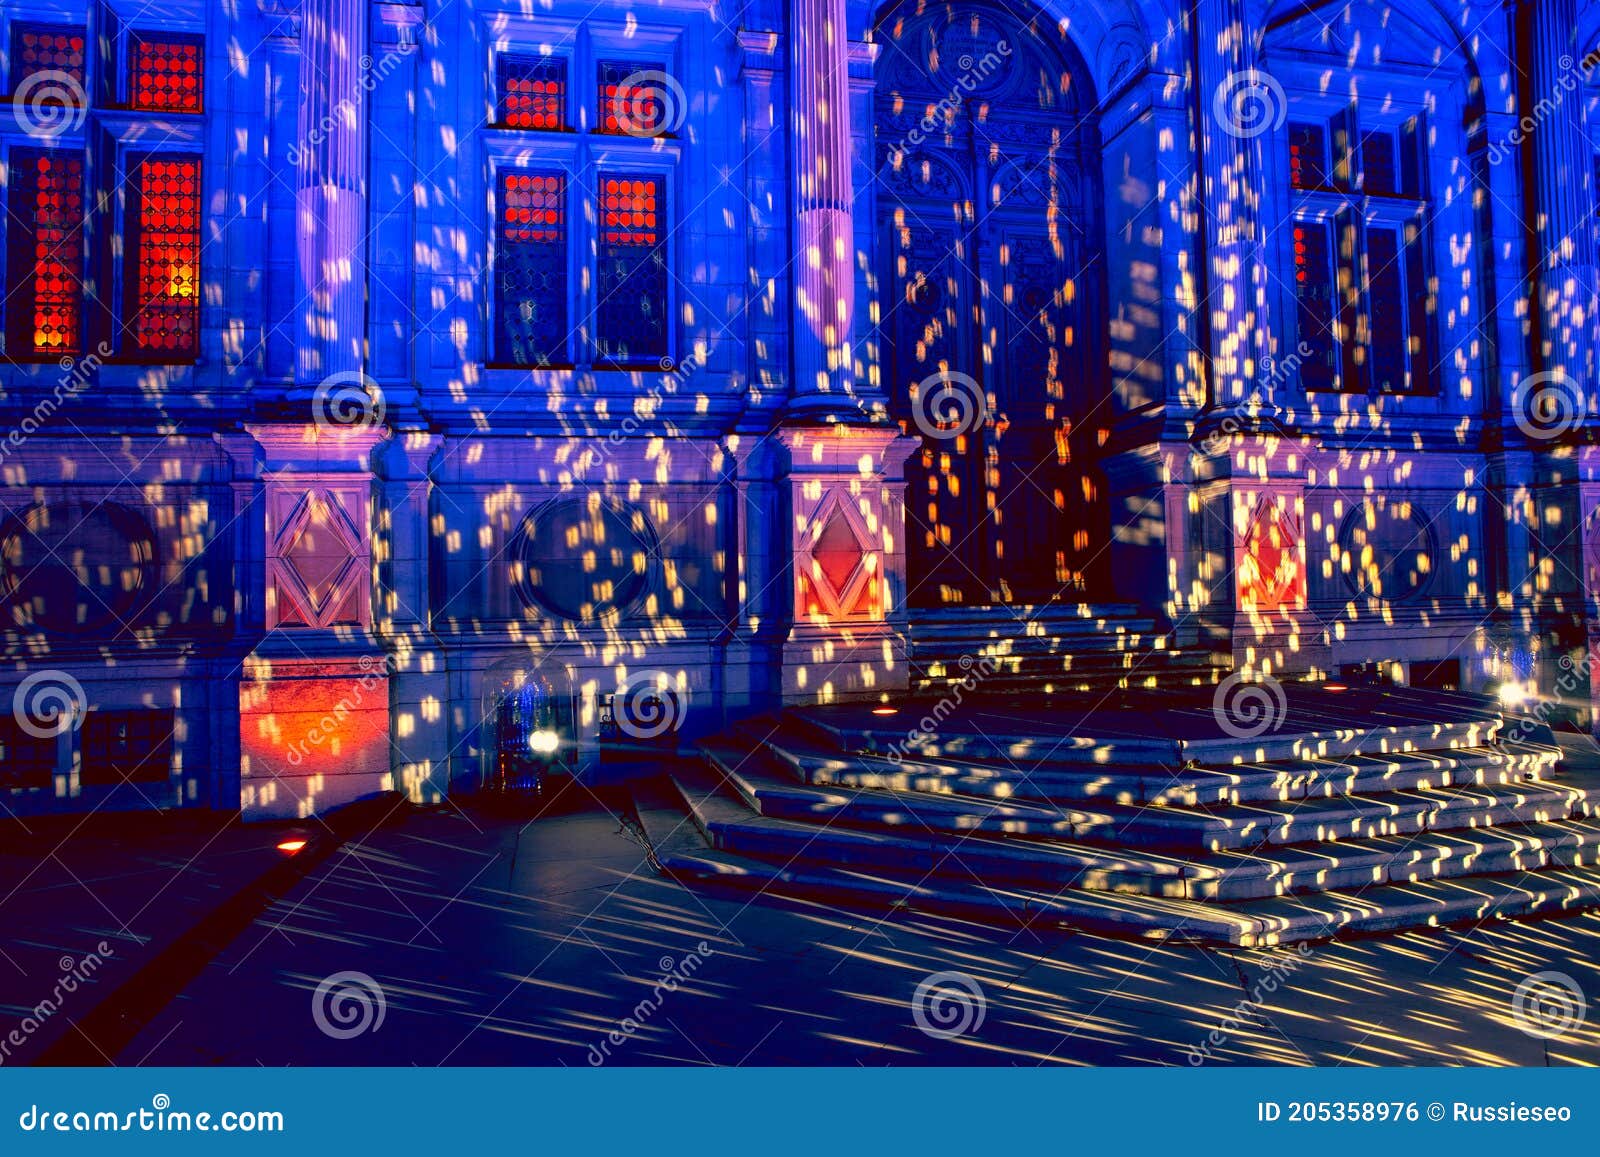 Paris City Hall in the Christmas Illumination Stock Photo - Image of ...